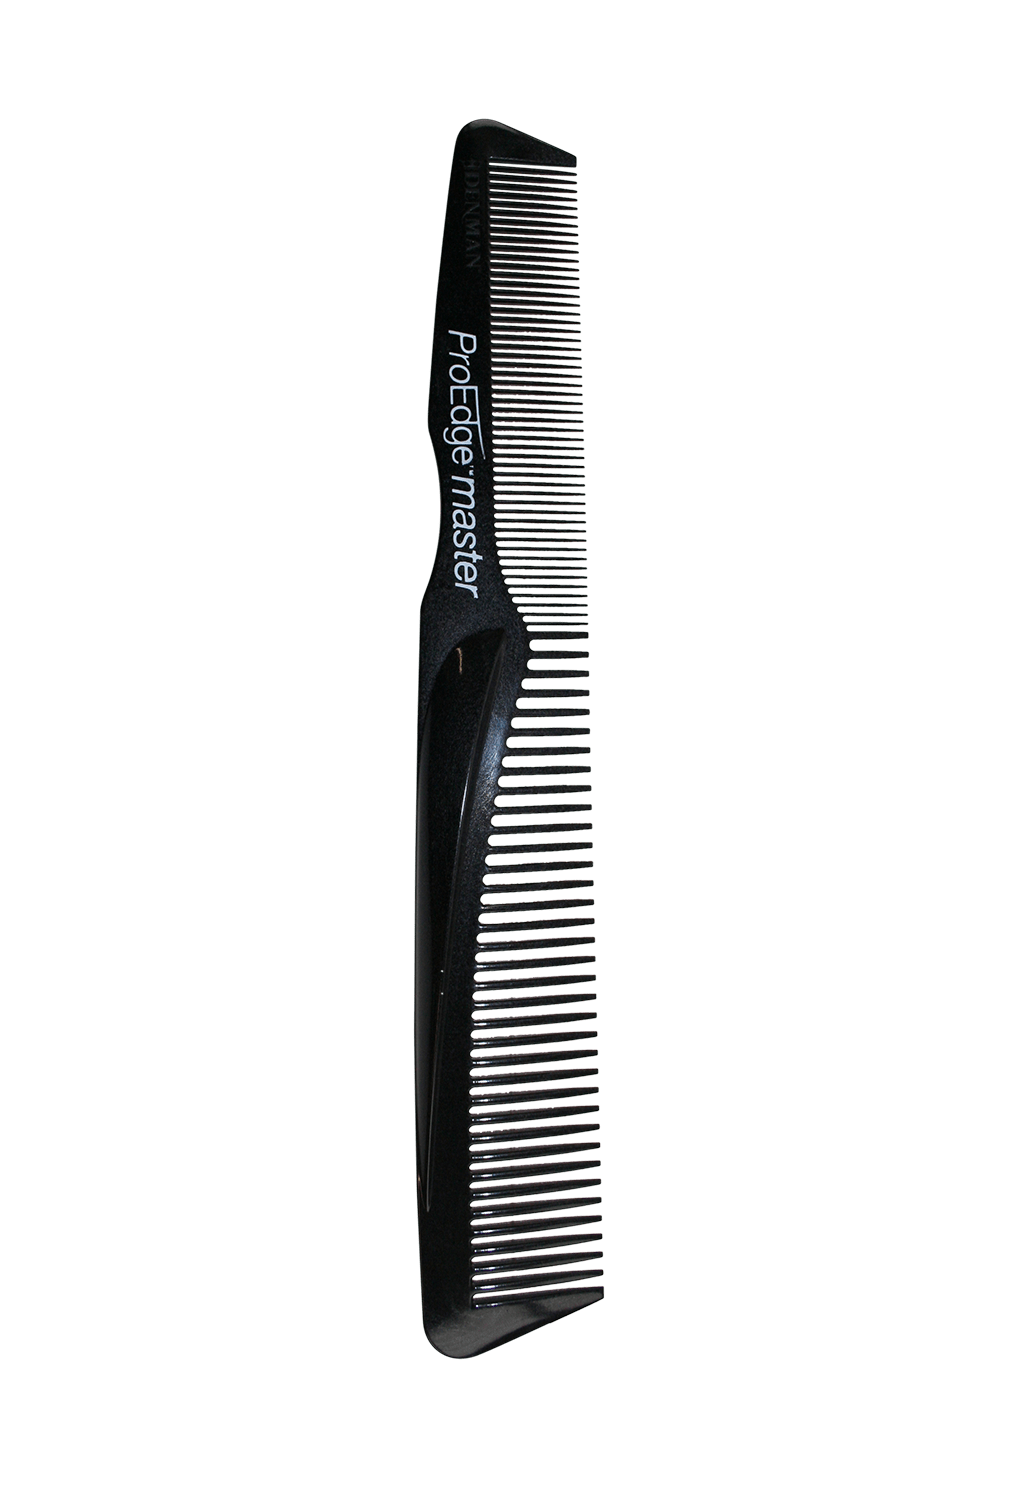 Pro Edge Cutting Comb Black 195mm Hair - Denman - Luxe Pacifique